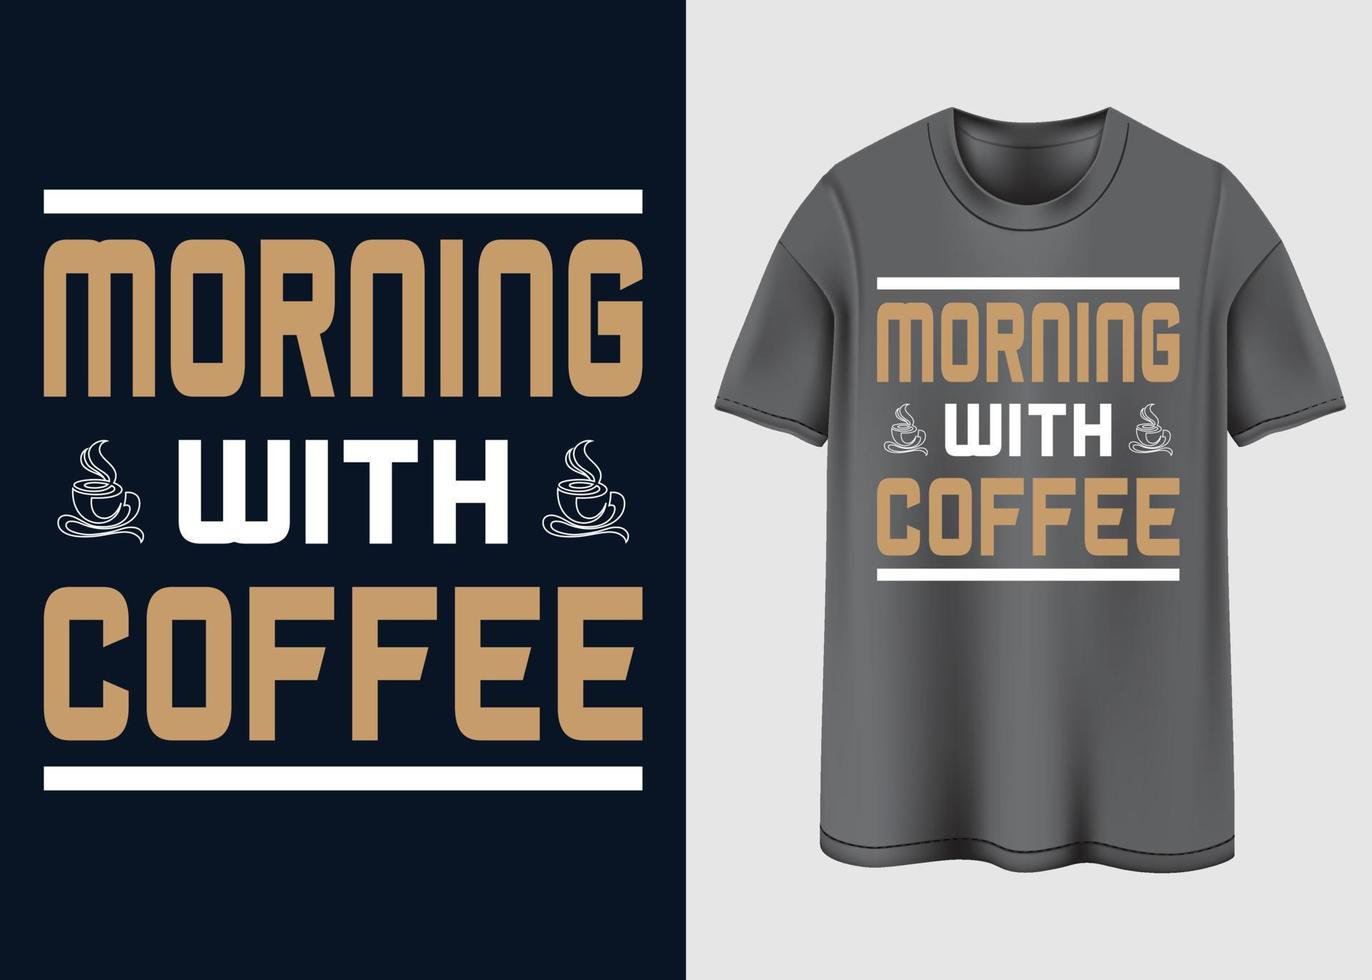 Coffee T-shirt design vector